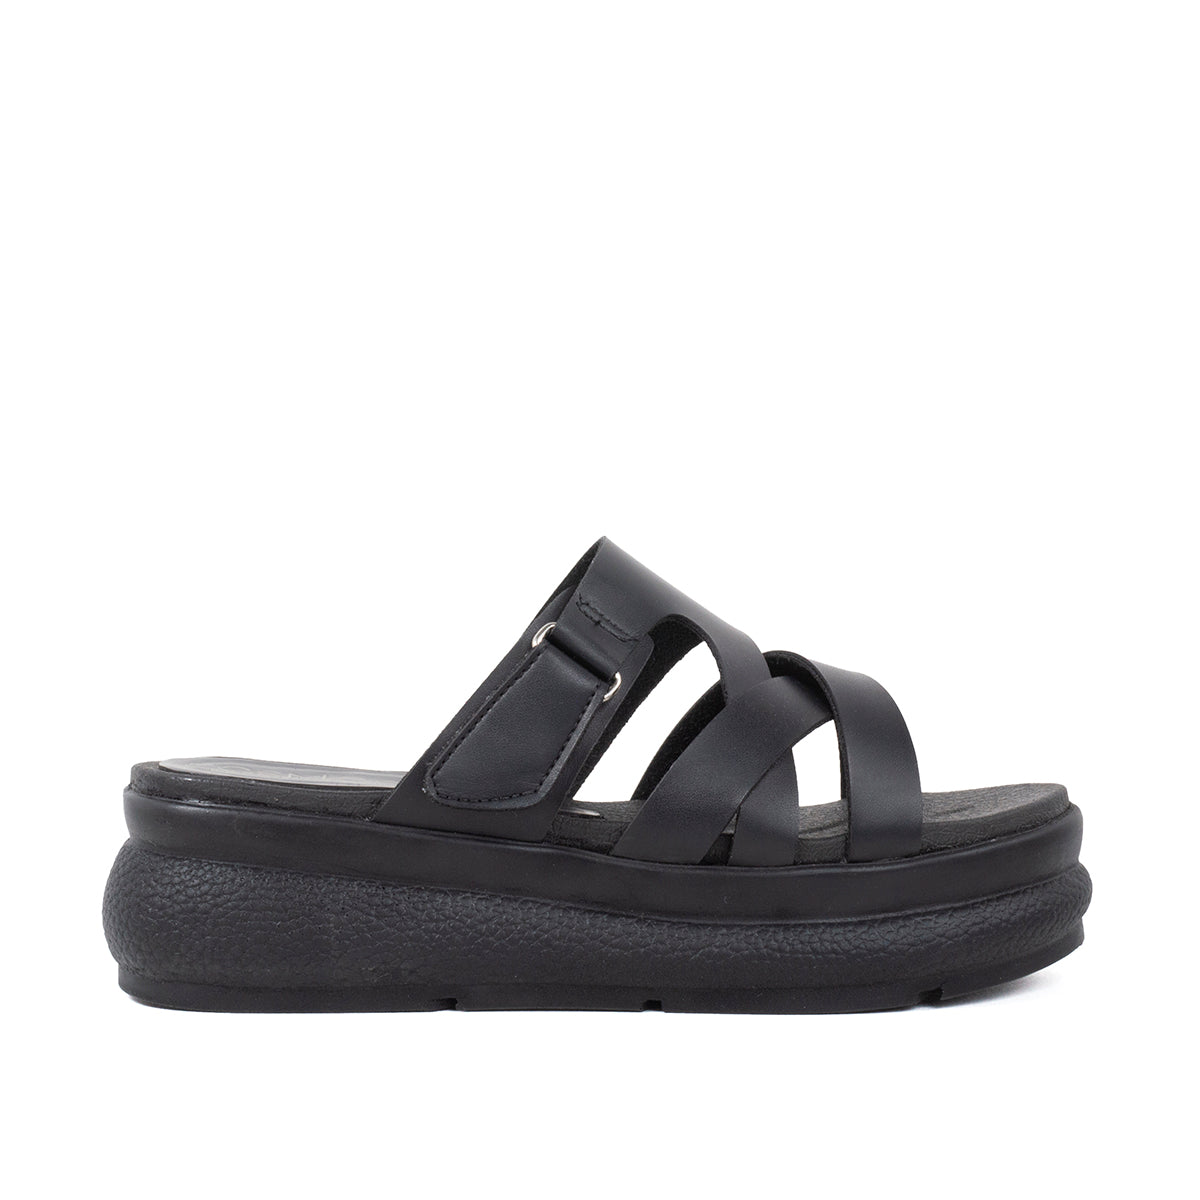 Sandalias color negro con correa